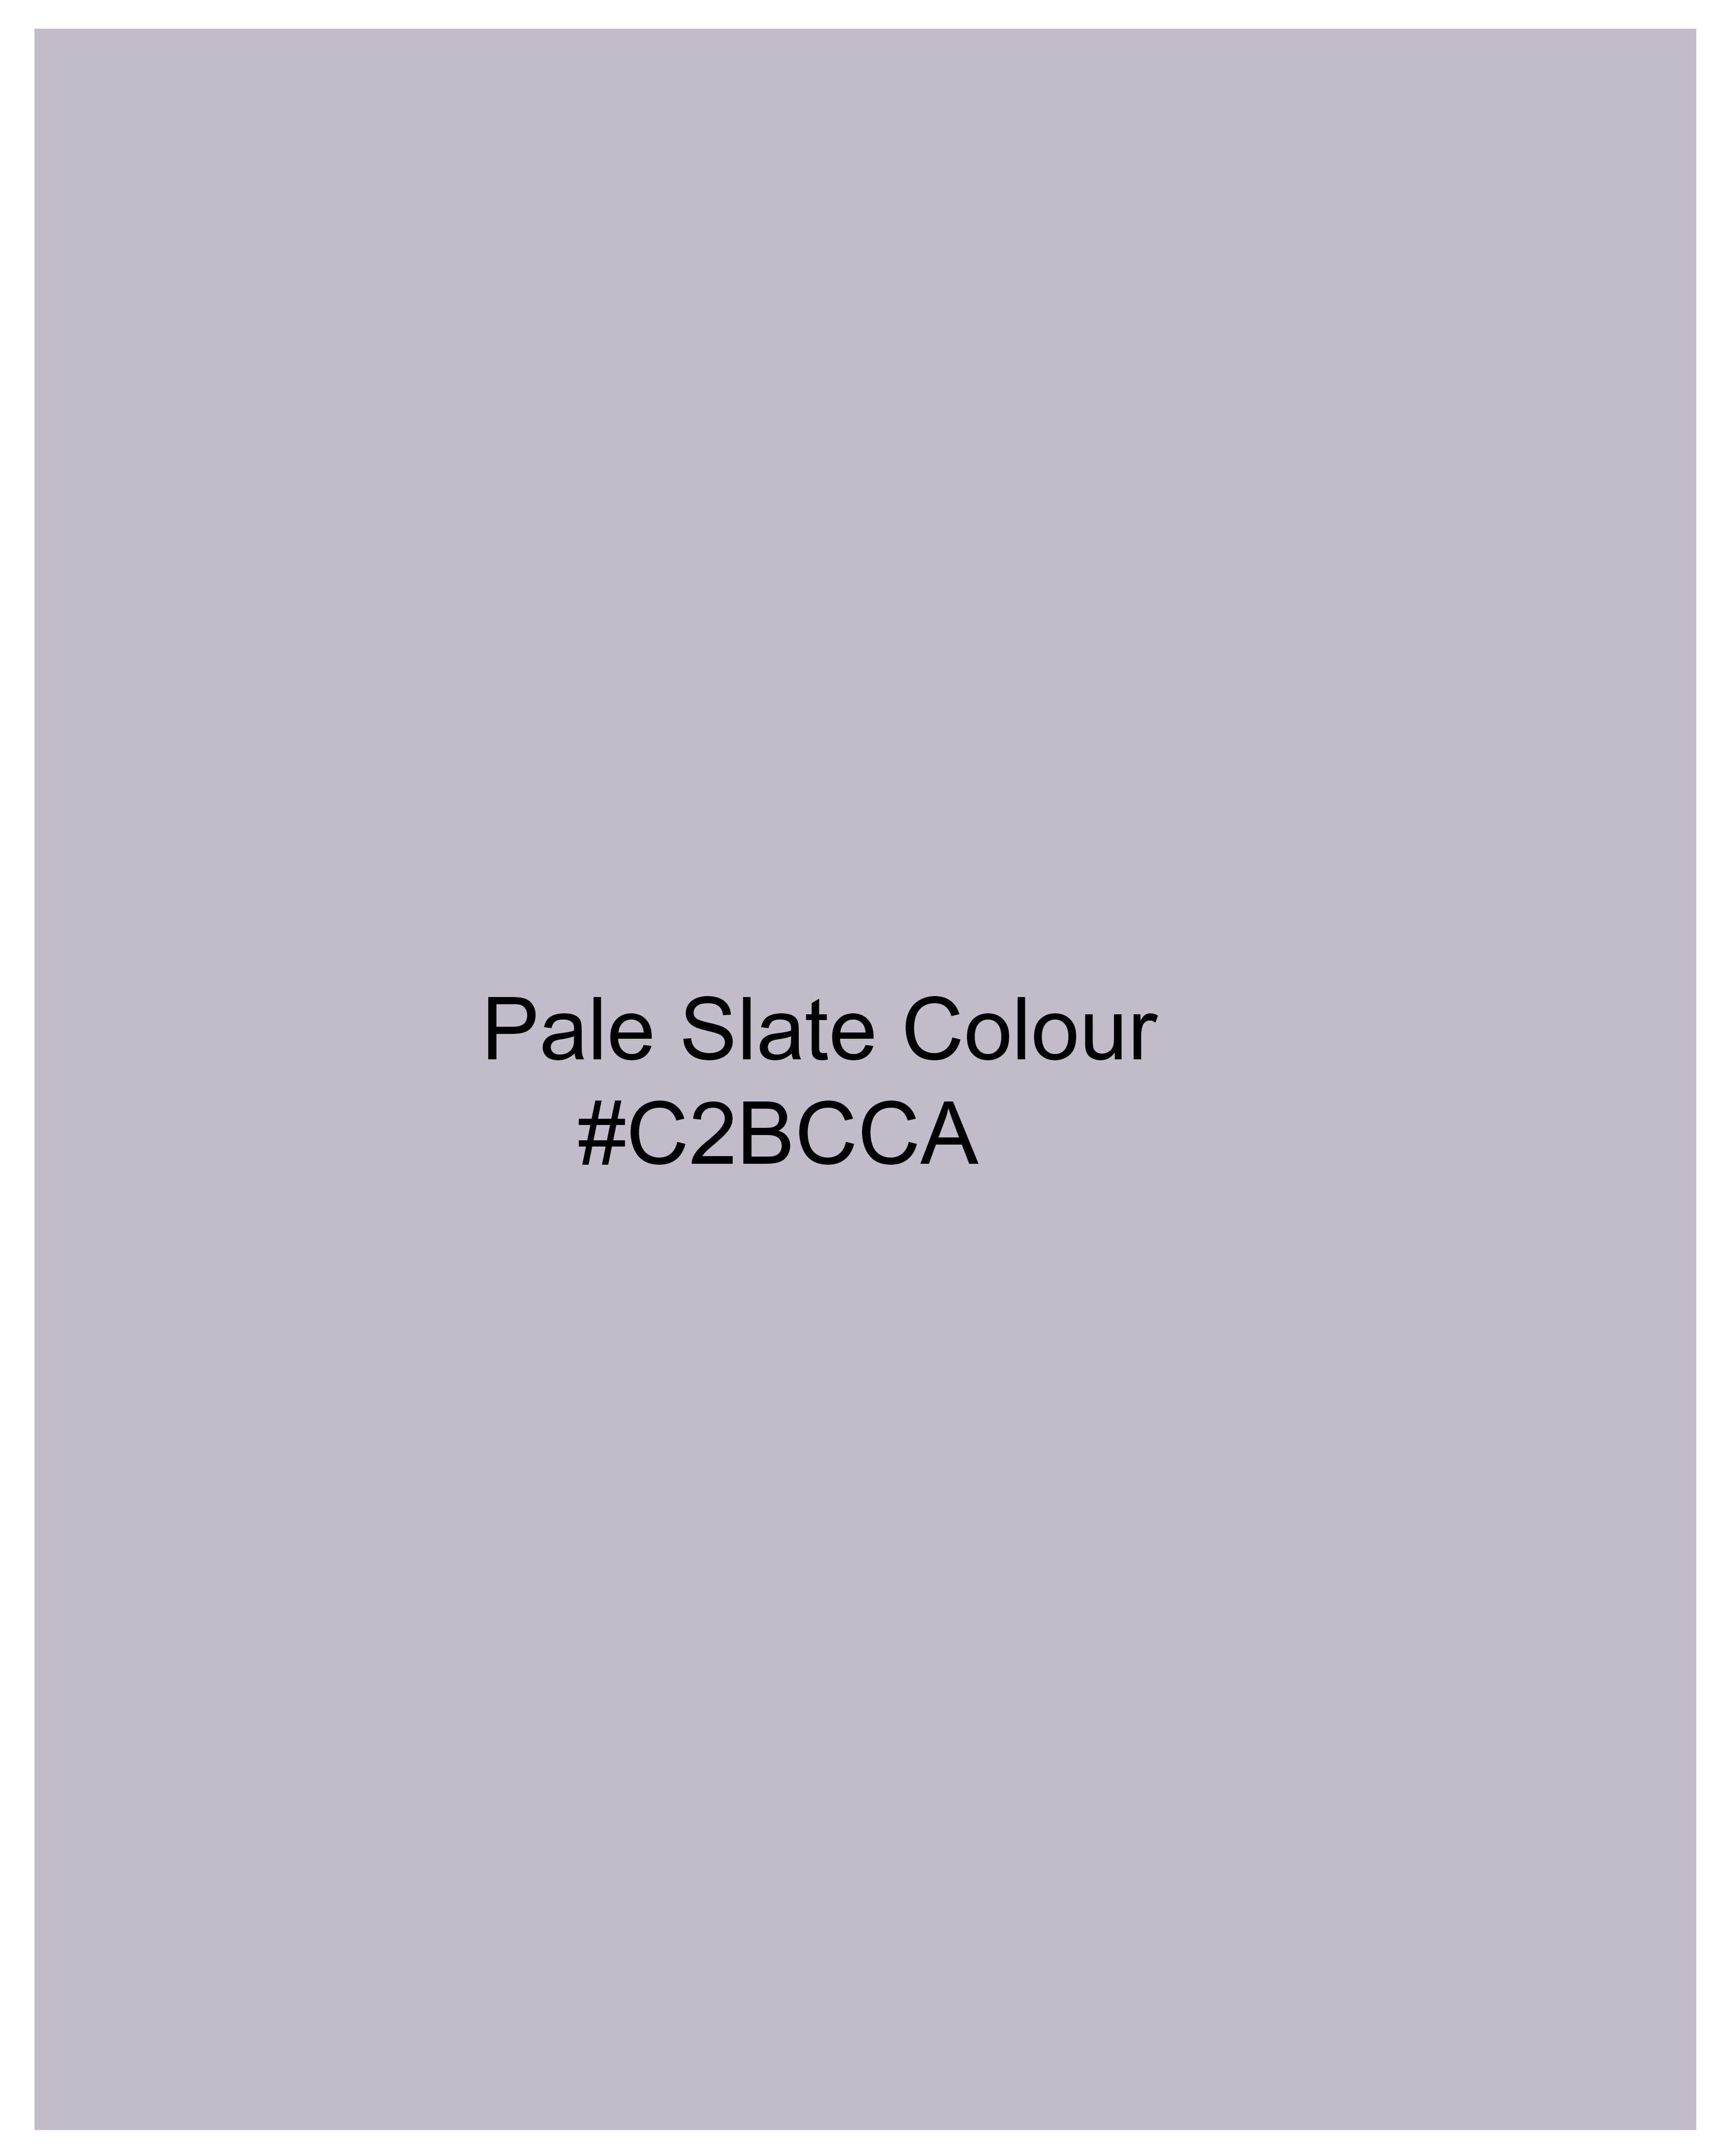 Pale Slate Lavender Super Soft Premium Cotton Shirt  8819-BLK-38,8819-BLK-H-38,8819-BLK-39,8819-BLK-H-39,8819-BLK-40,8819-BLK-H-40,8819-BLK-42,8819-BLK-H-42,8819-BLK-44,8819-BLK-H-44,8819-BLK-46,8819-BLK-H-46,8819-BLK-48,8819-BLK-H-48,8819-BLK-50,8819-BLK-H-50,8819-BLK-52,8819-BLK-H-52